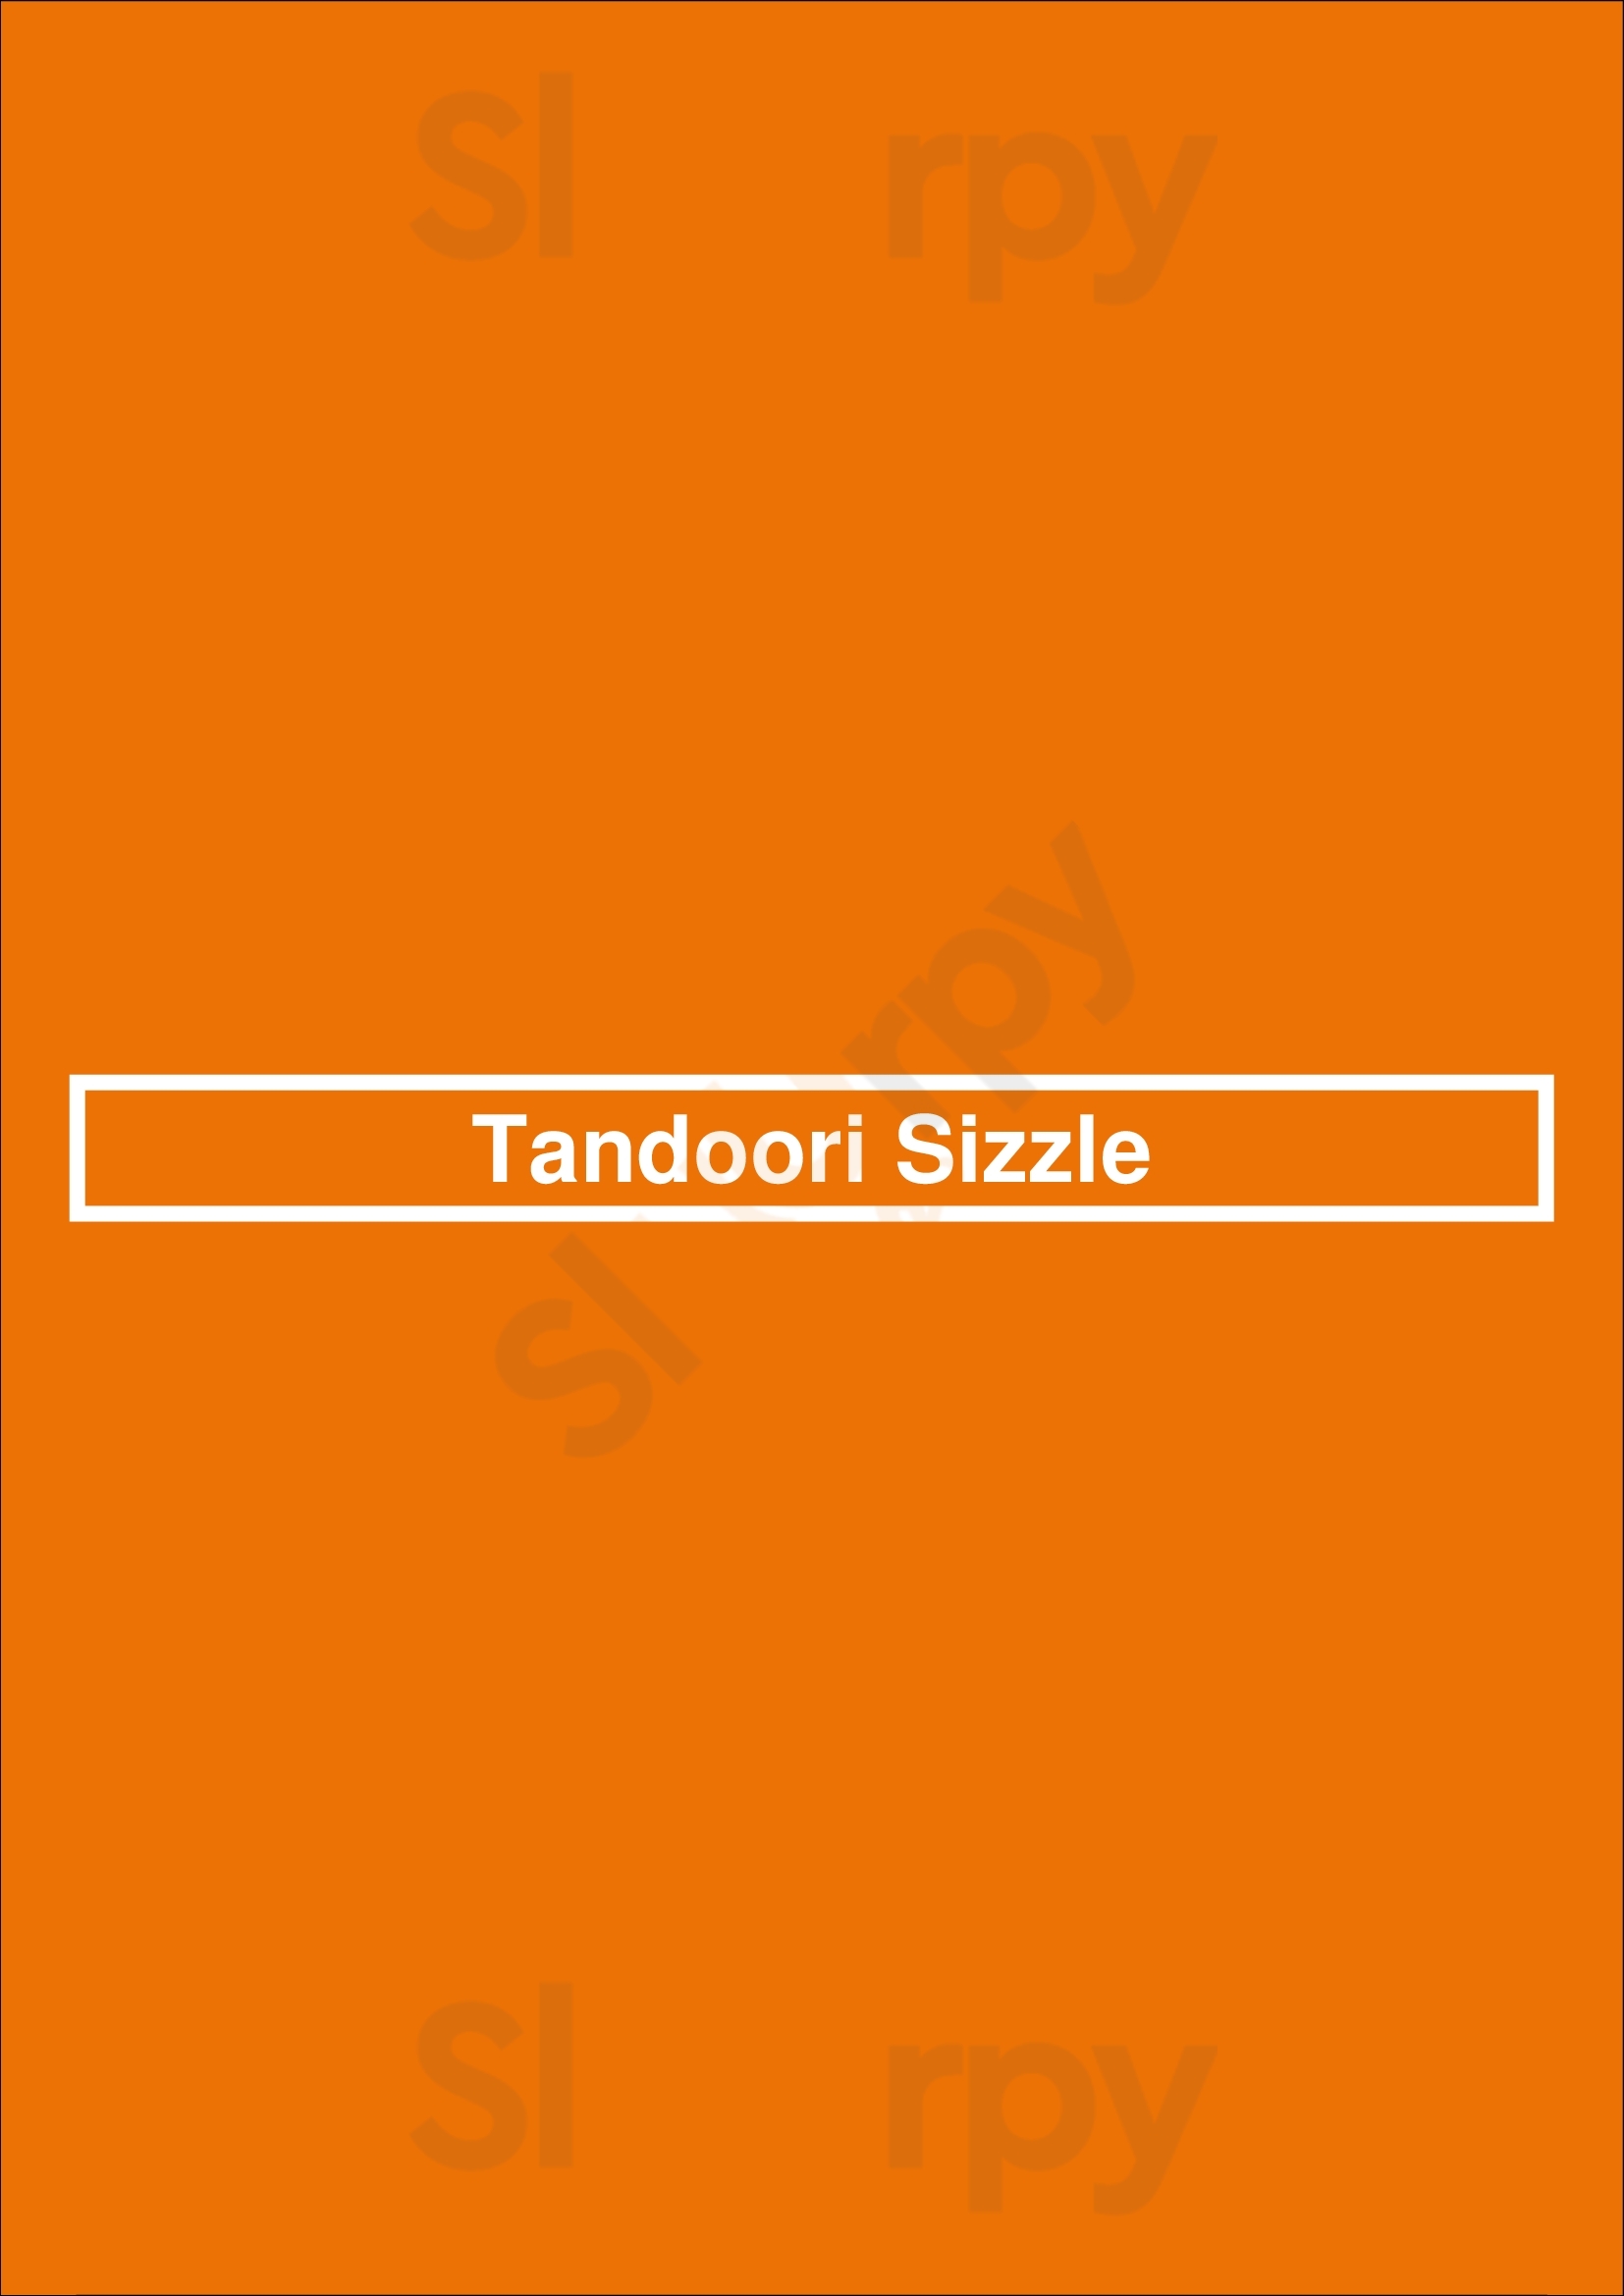 Tandoori Sizzle Kingston Menu - 1